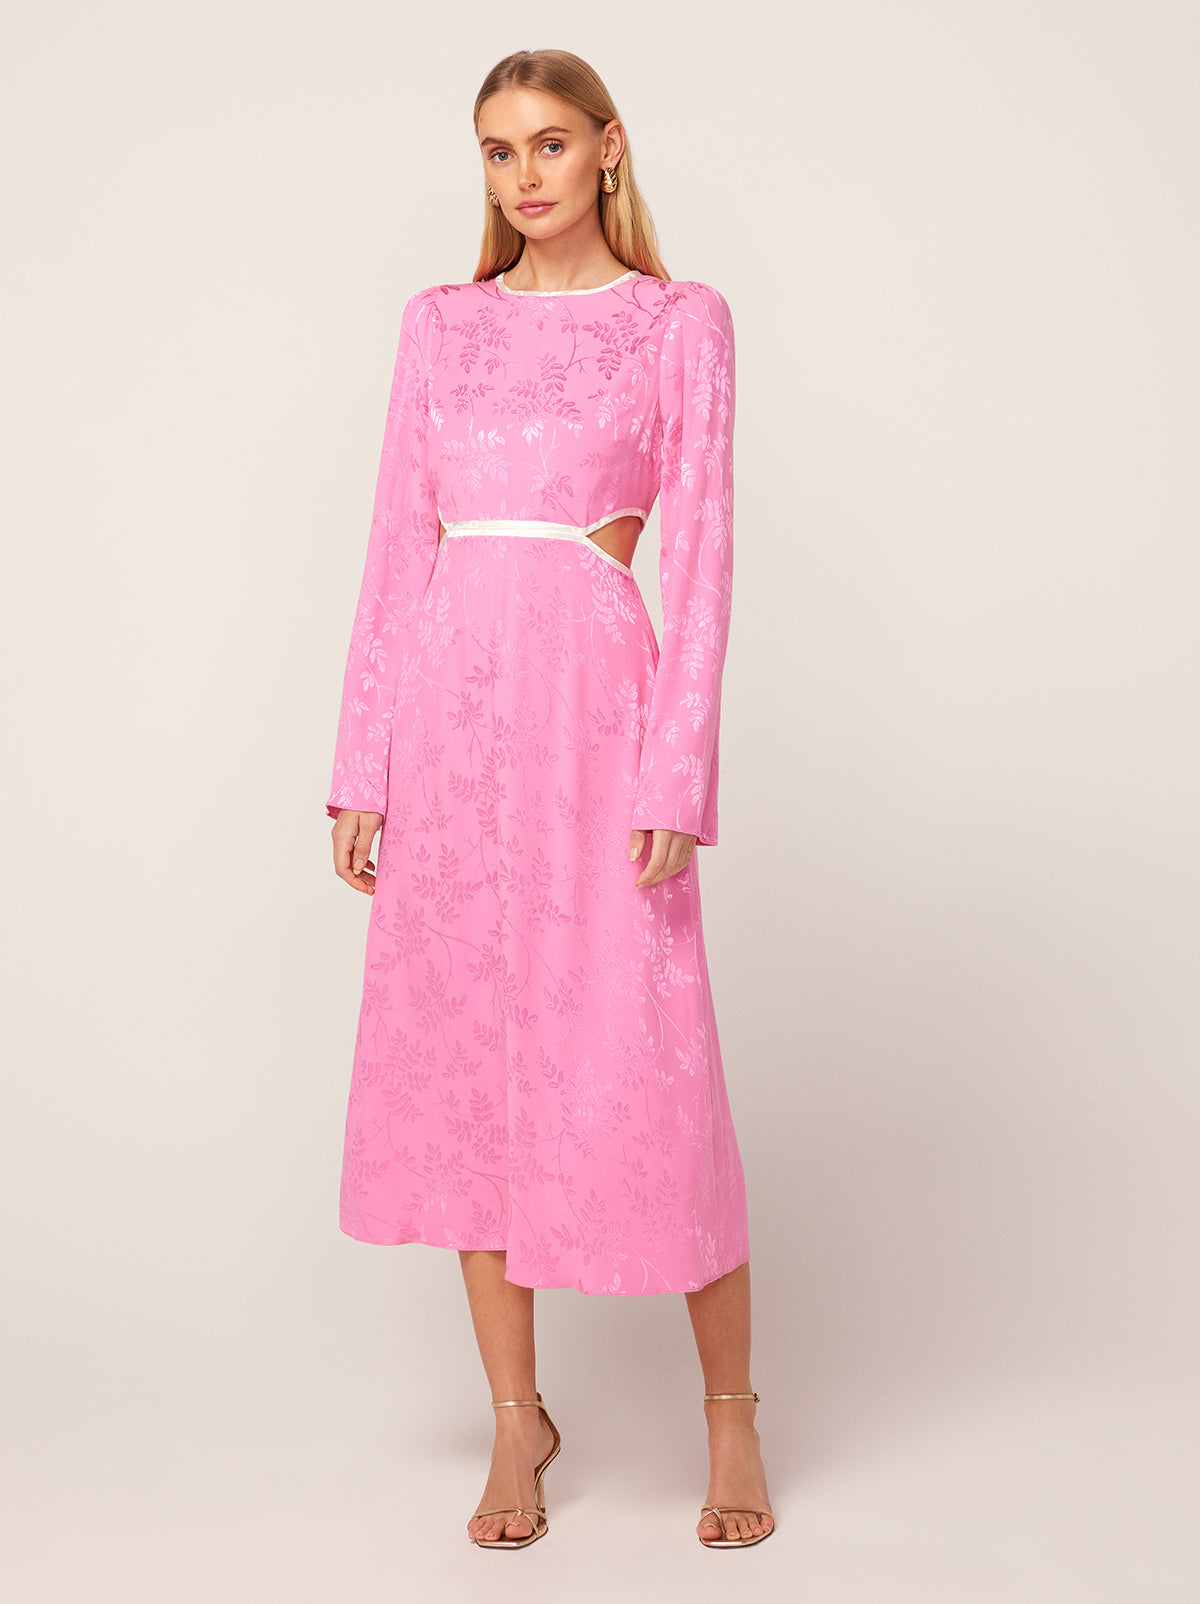 Blythe Pink Floral Jacquard Dress